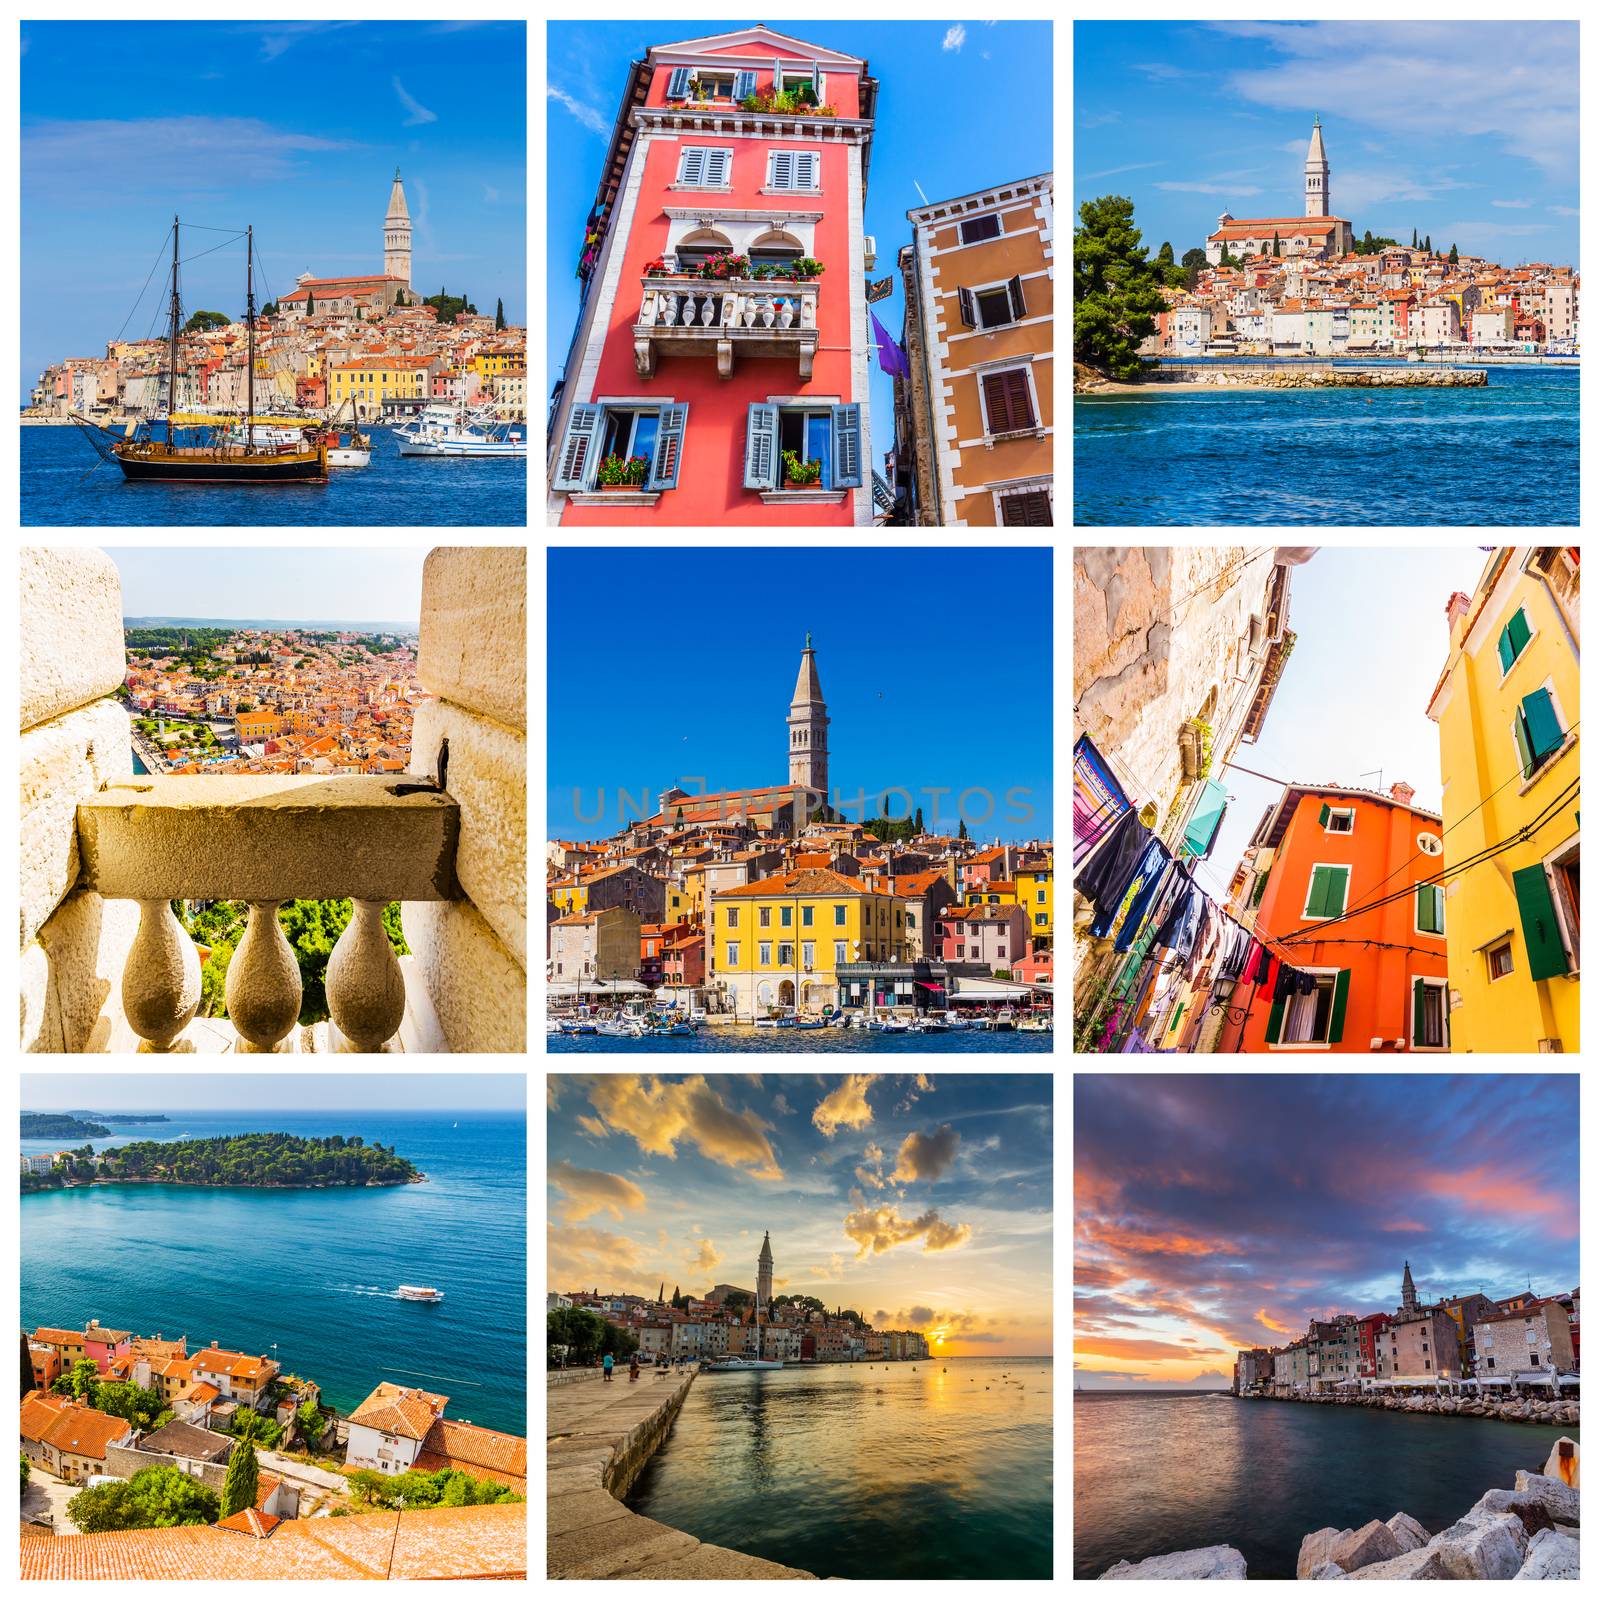 Collage of Rovinj photos in Croatia by DaLiu